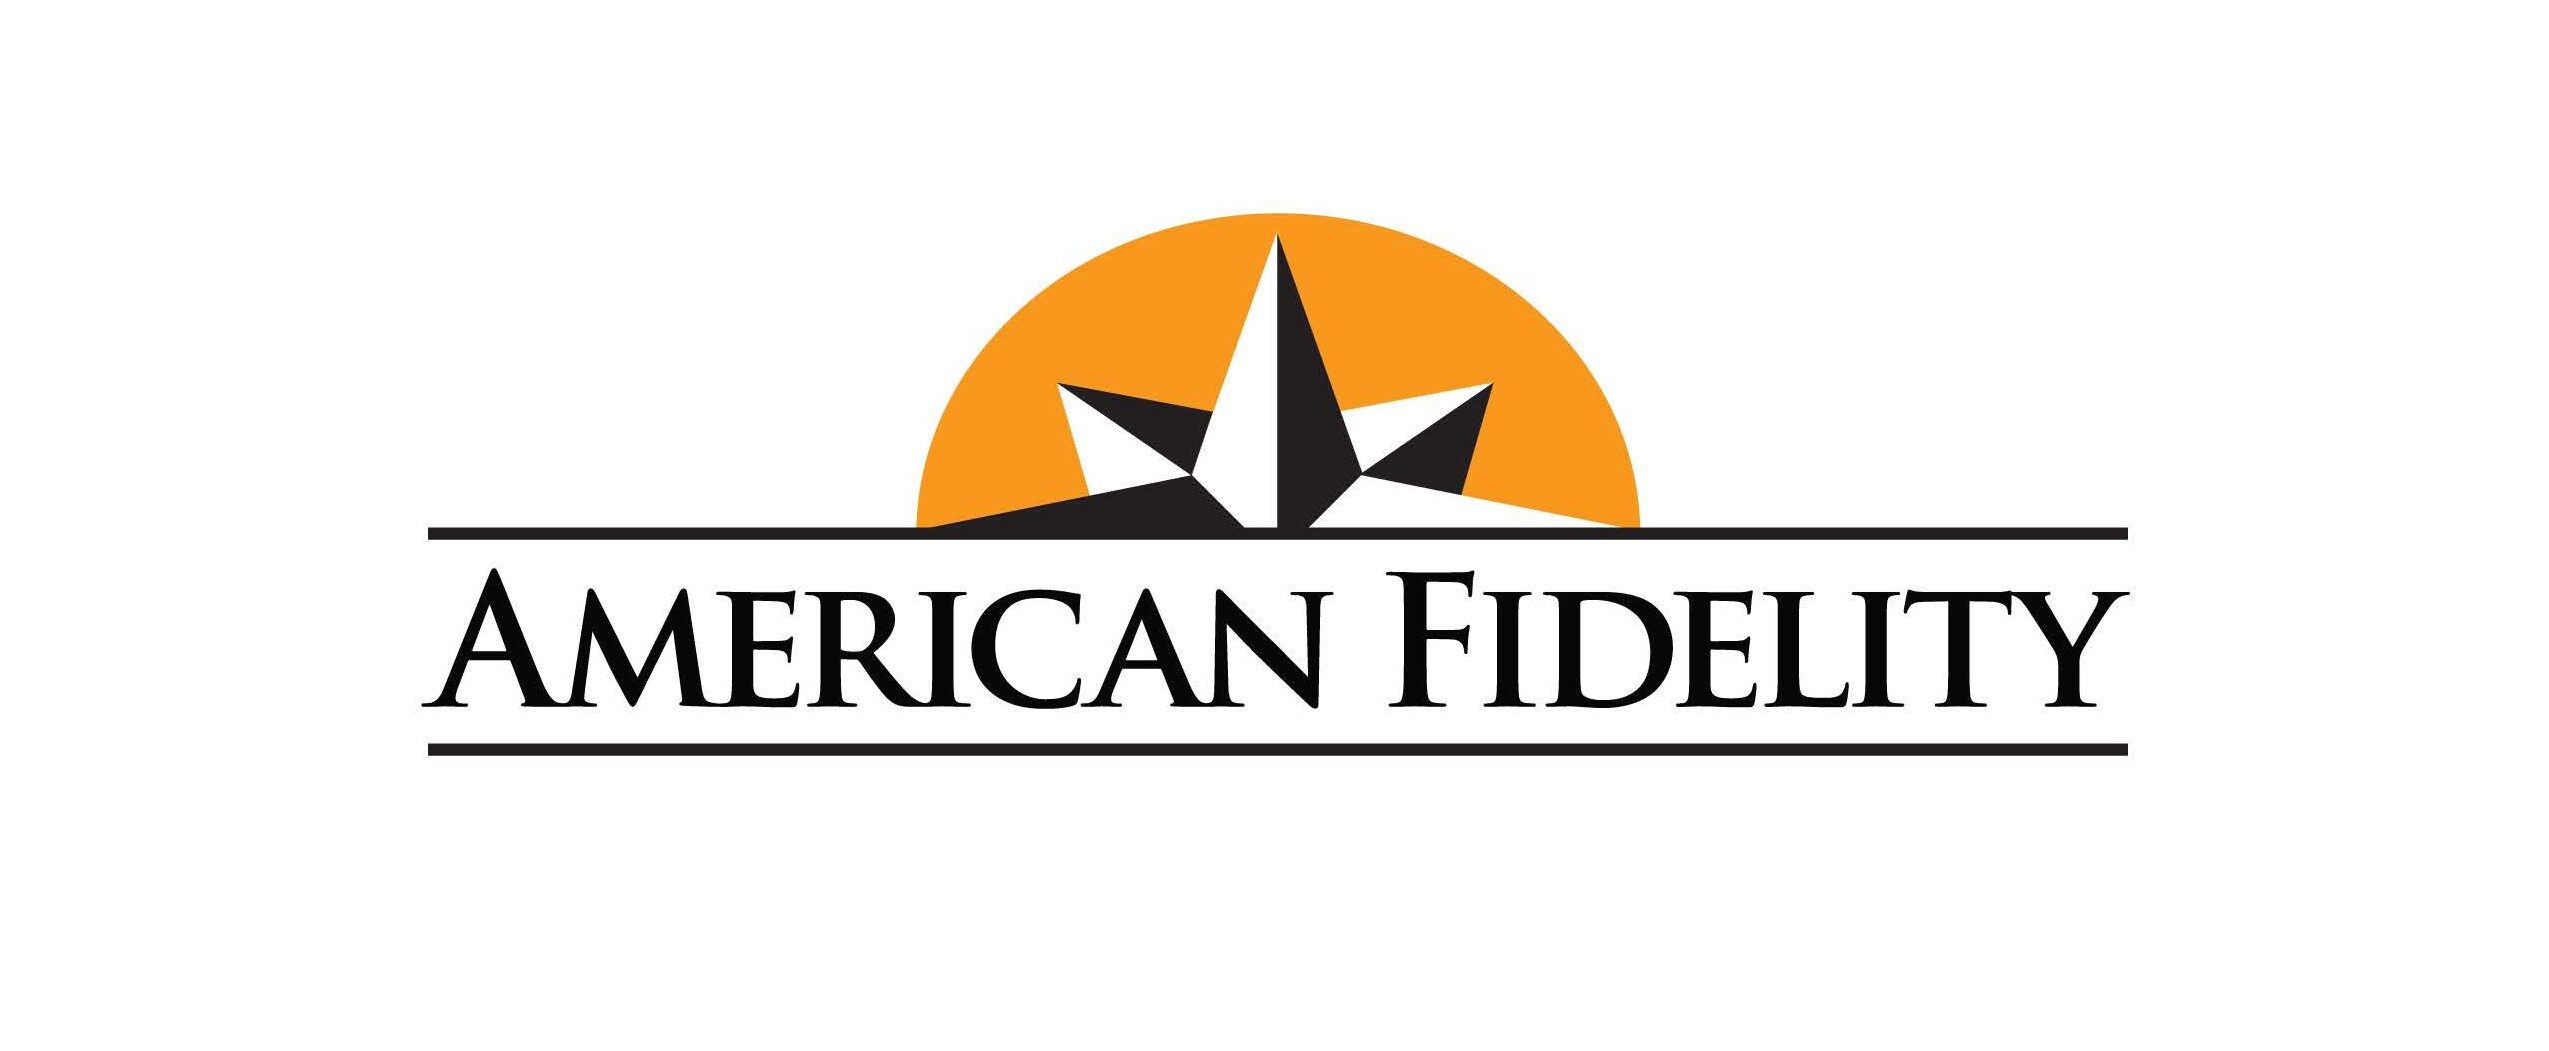 American Fidelity Mortgage